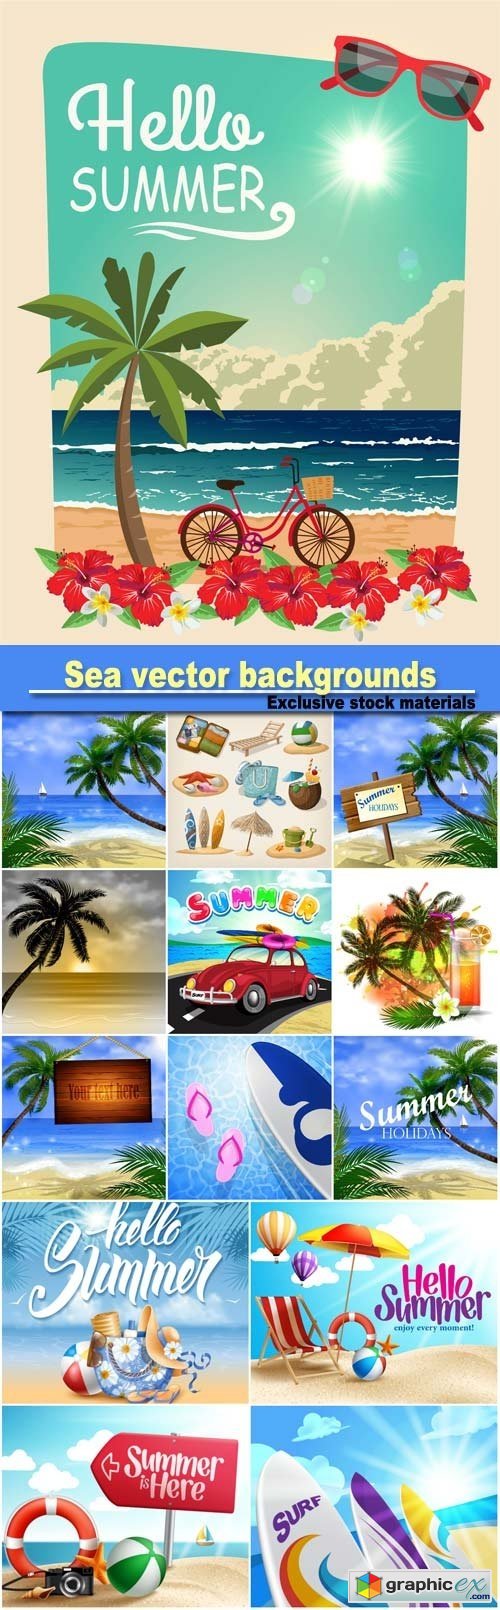 Hello summer, sea vector backgrounds